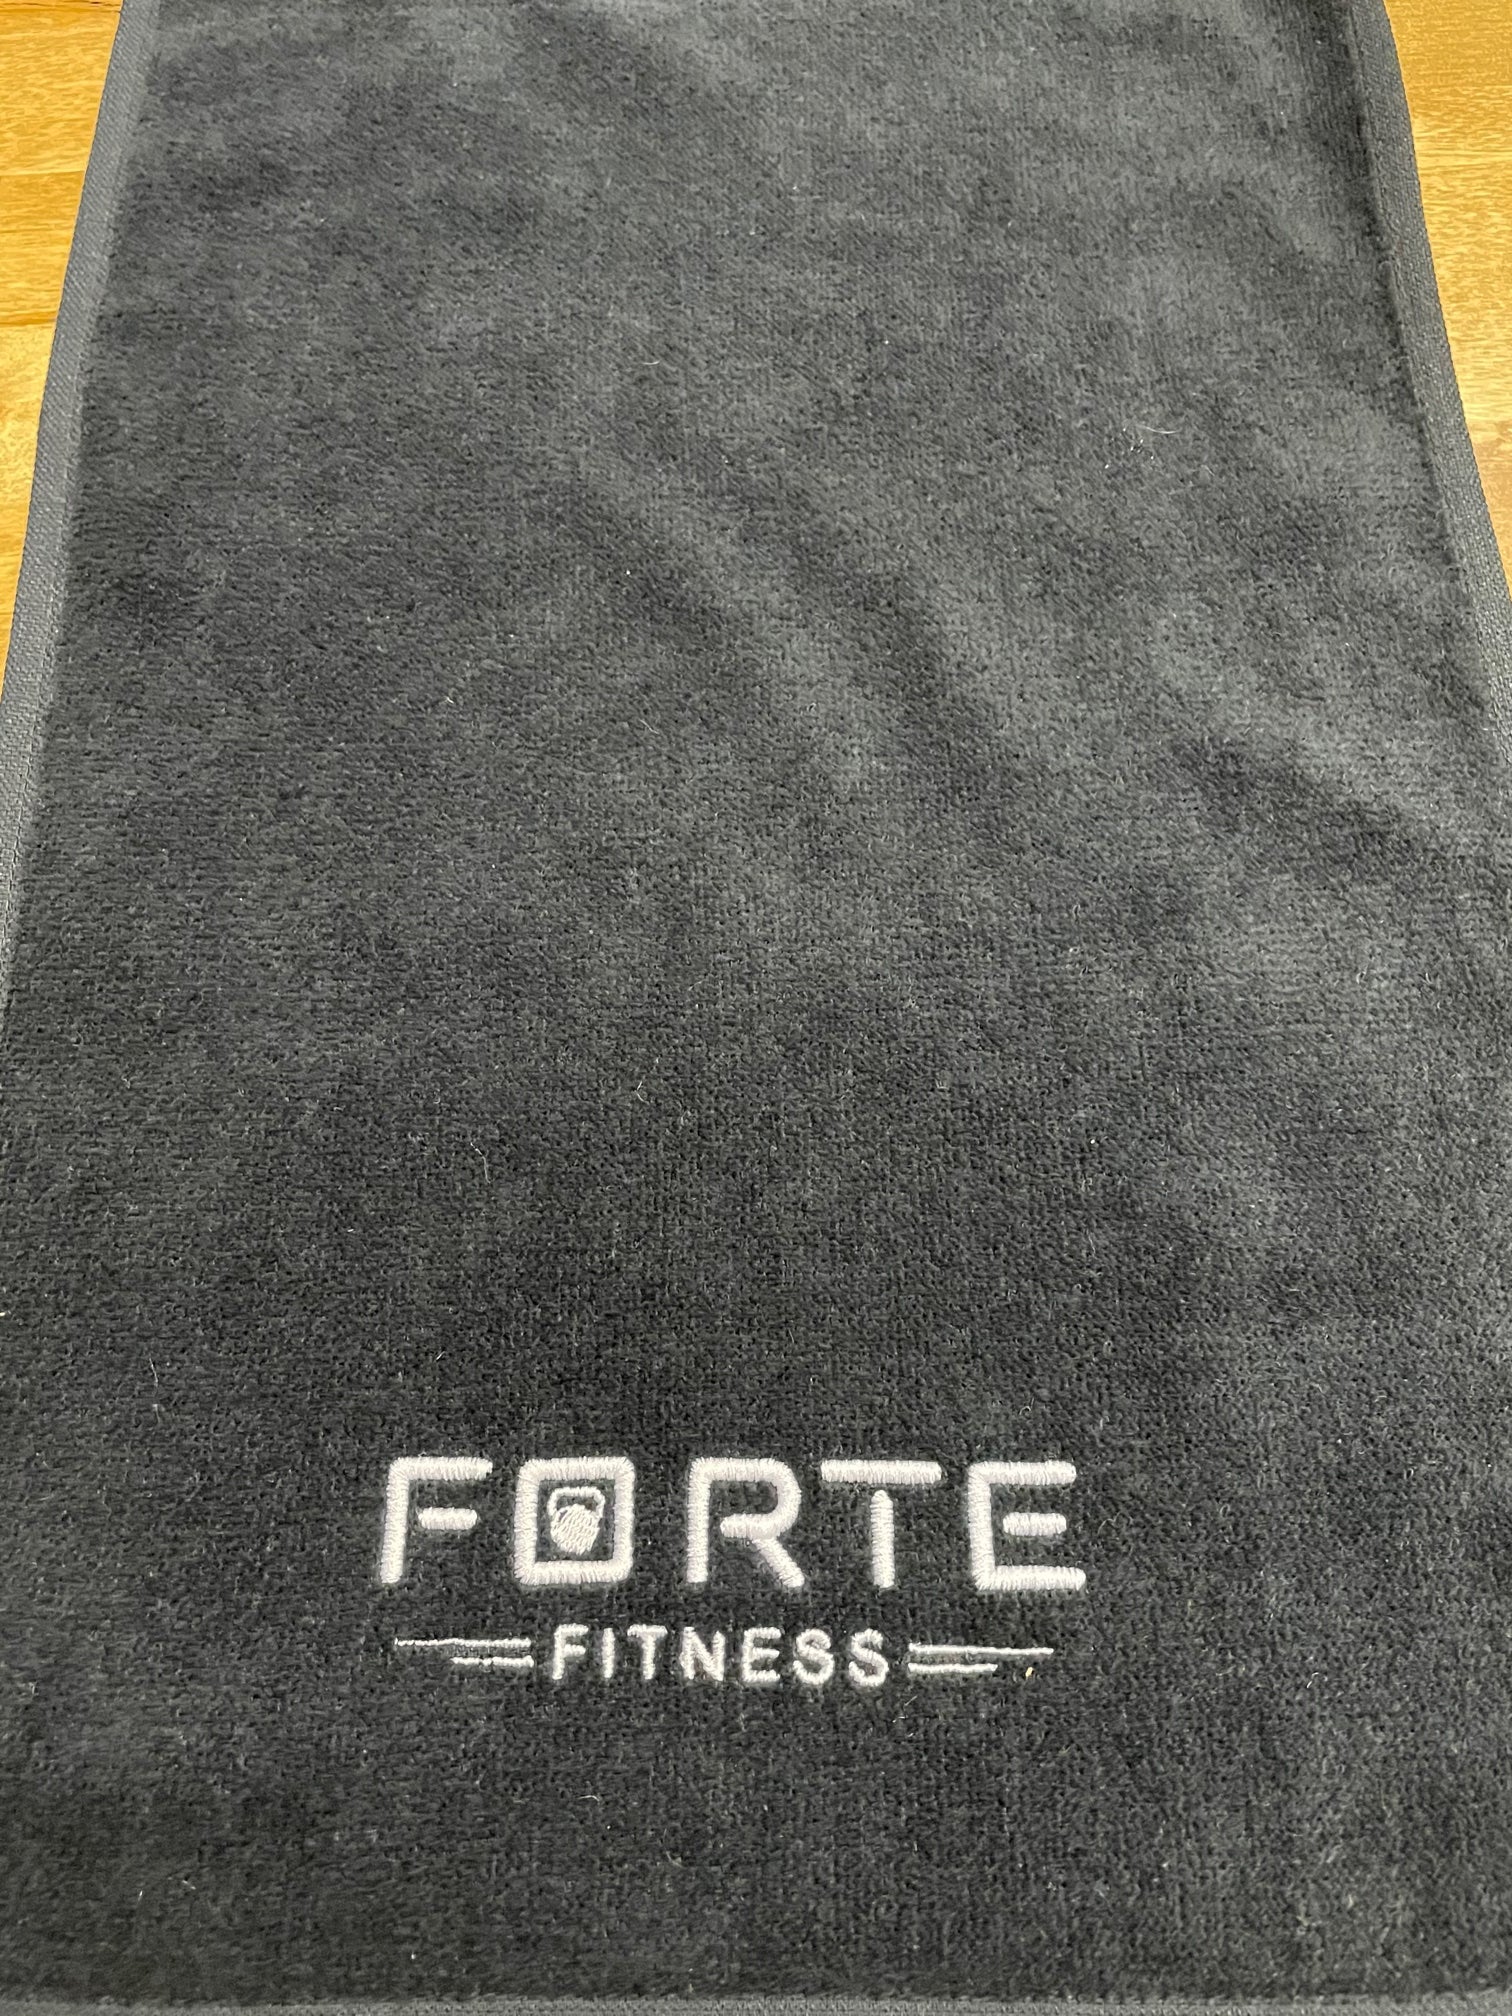 Forte Fitness Black Sweat Towel